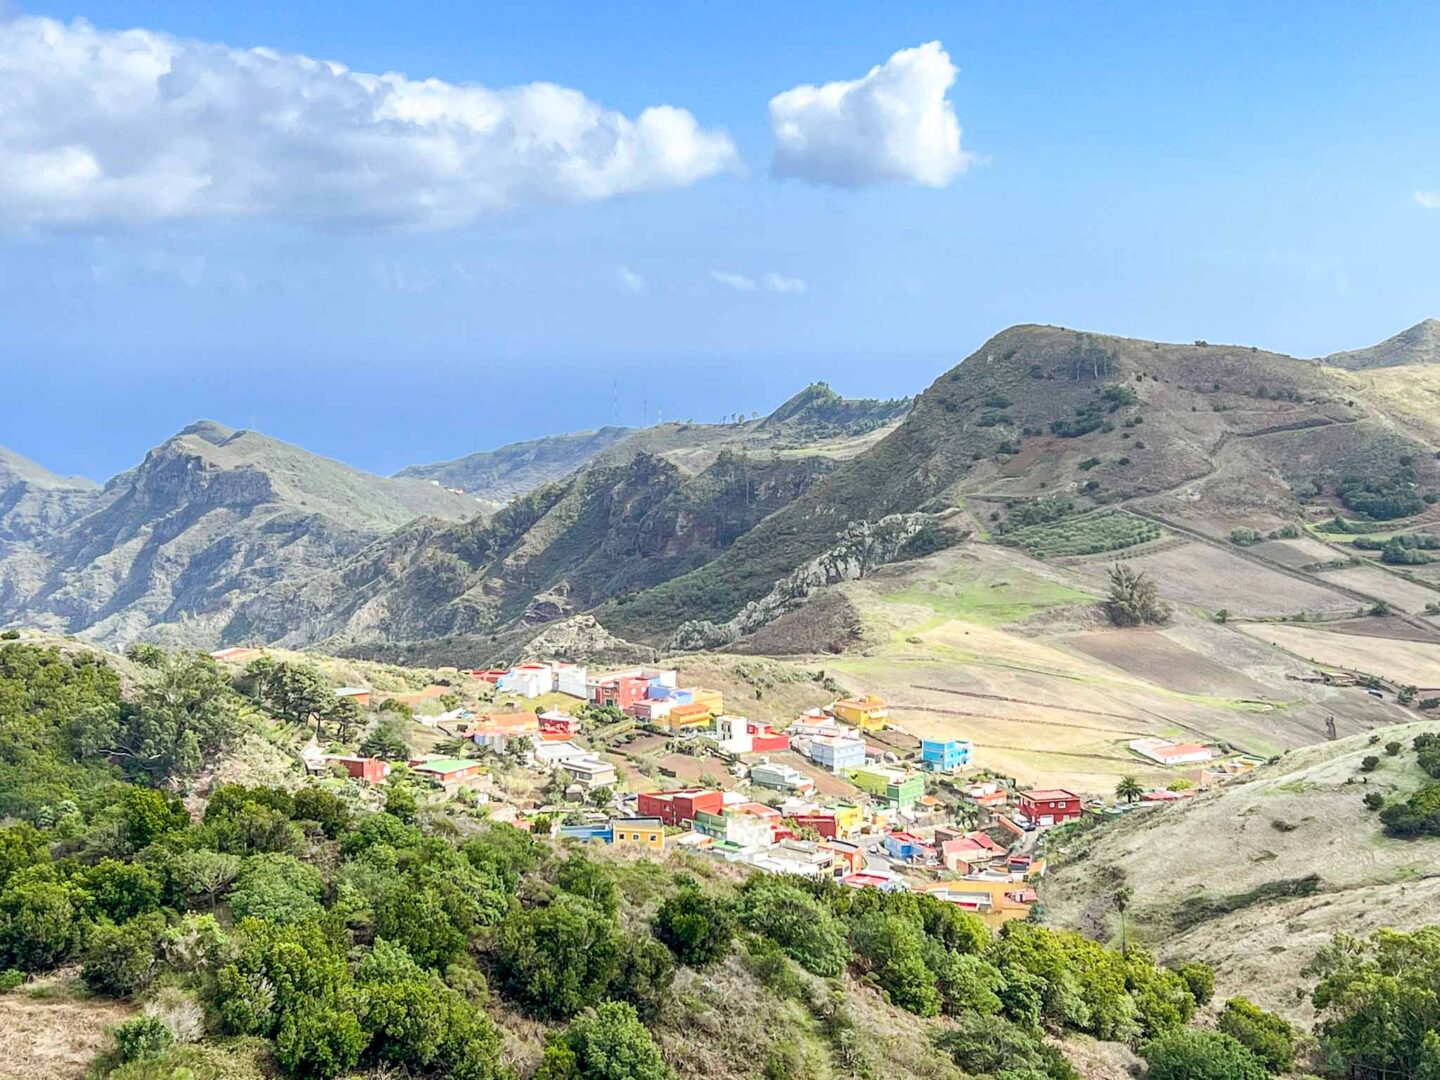 Tenerife road trip, mountain and village view from Mirador de Jardina